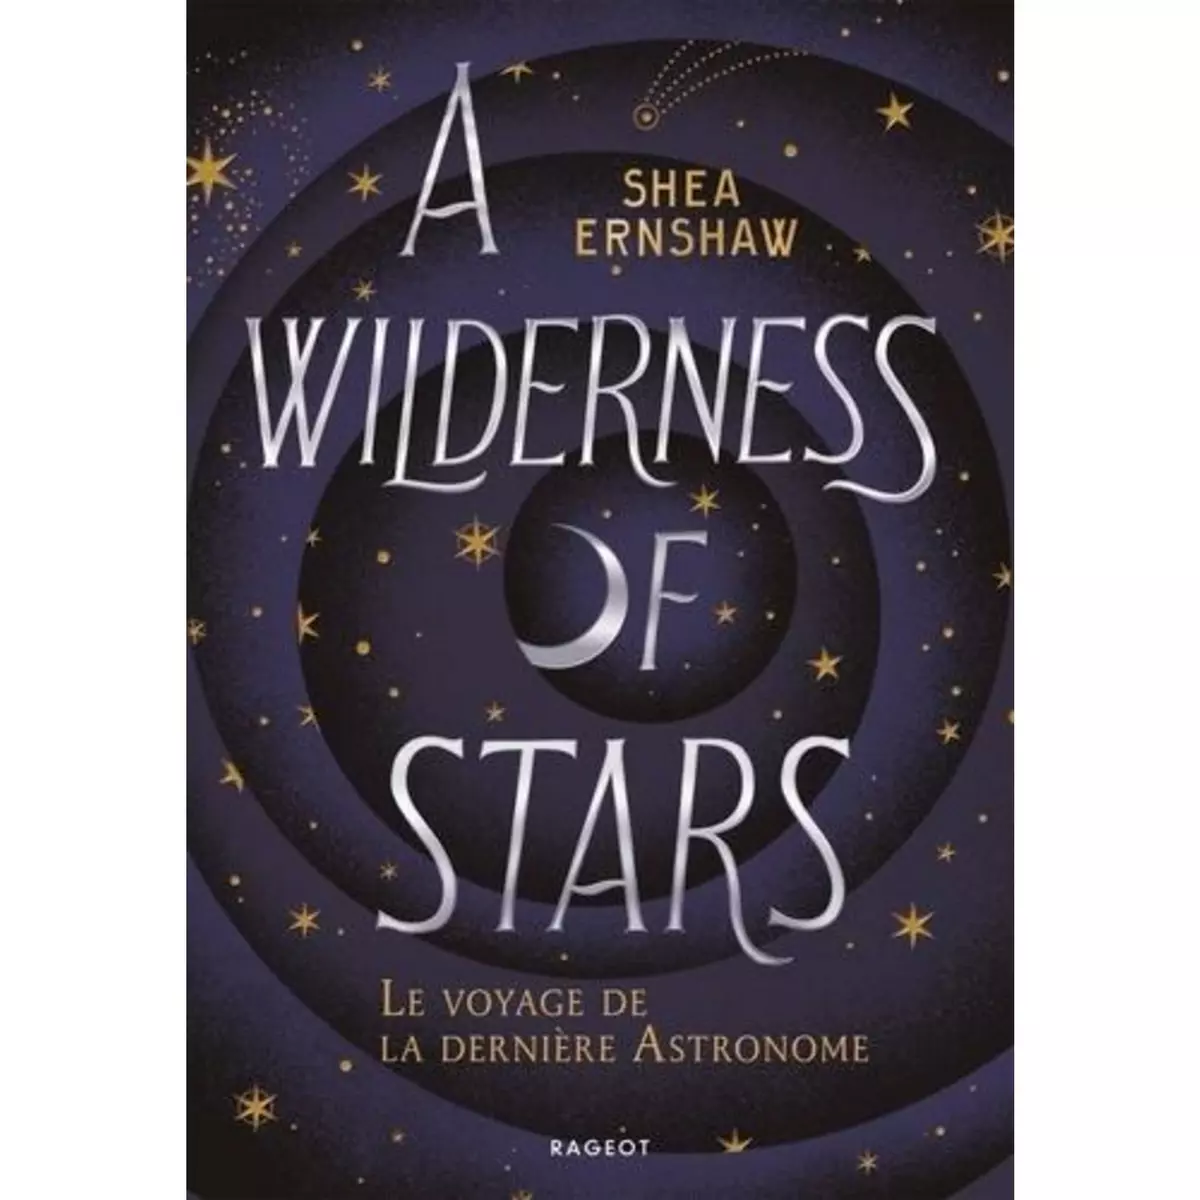  A WILDERNESS OF STARS. LE VOYAGE DE LA DERNIERE ASTRONOME, Ernshaw Shea